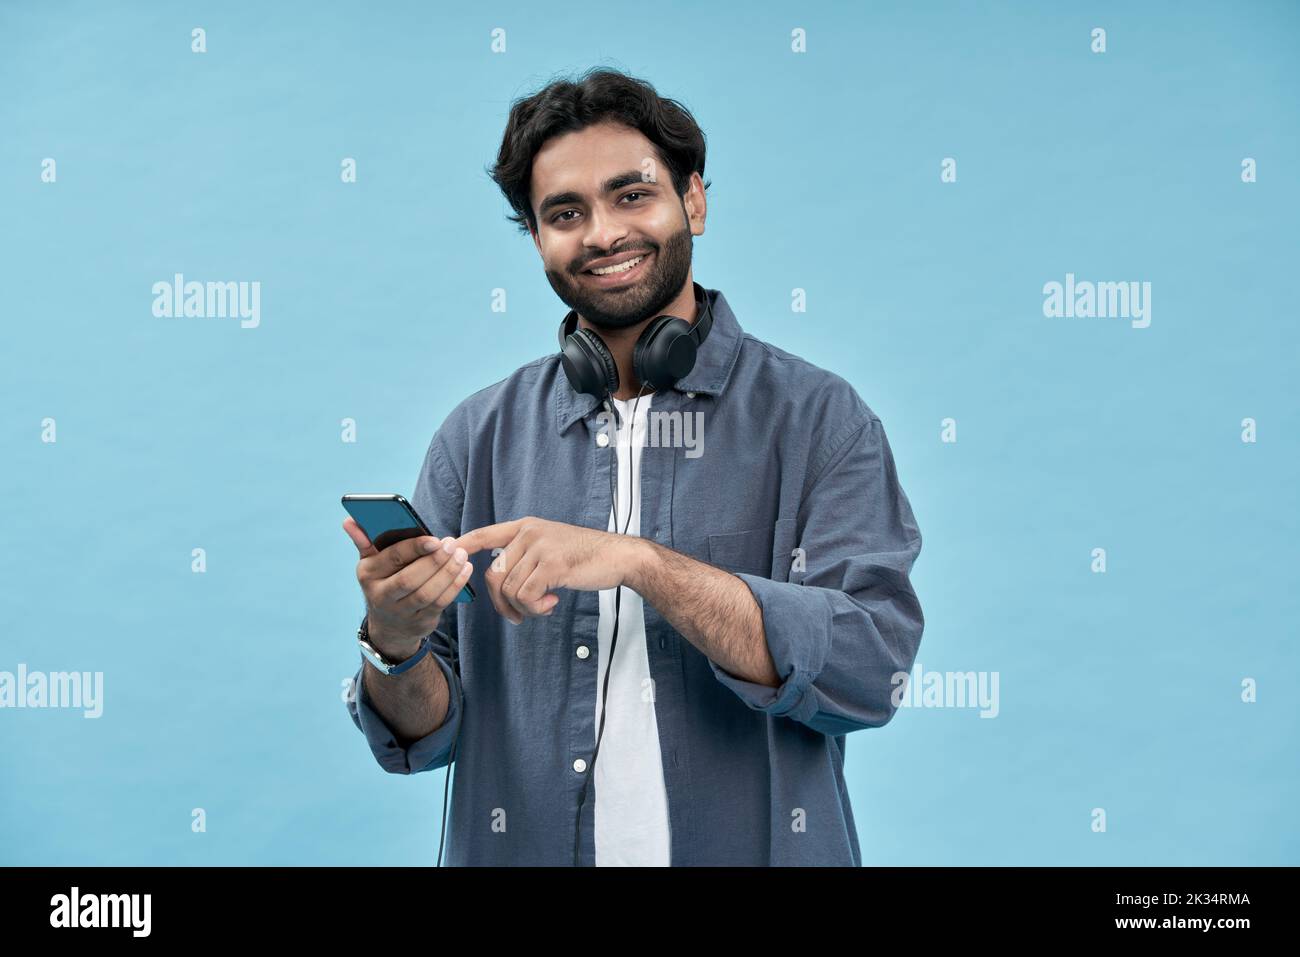 Estudiante árabe feliz usando teléfono móvil aislado sobre fondo azul. Foto de stock